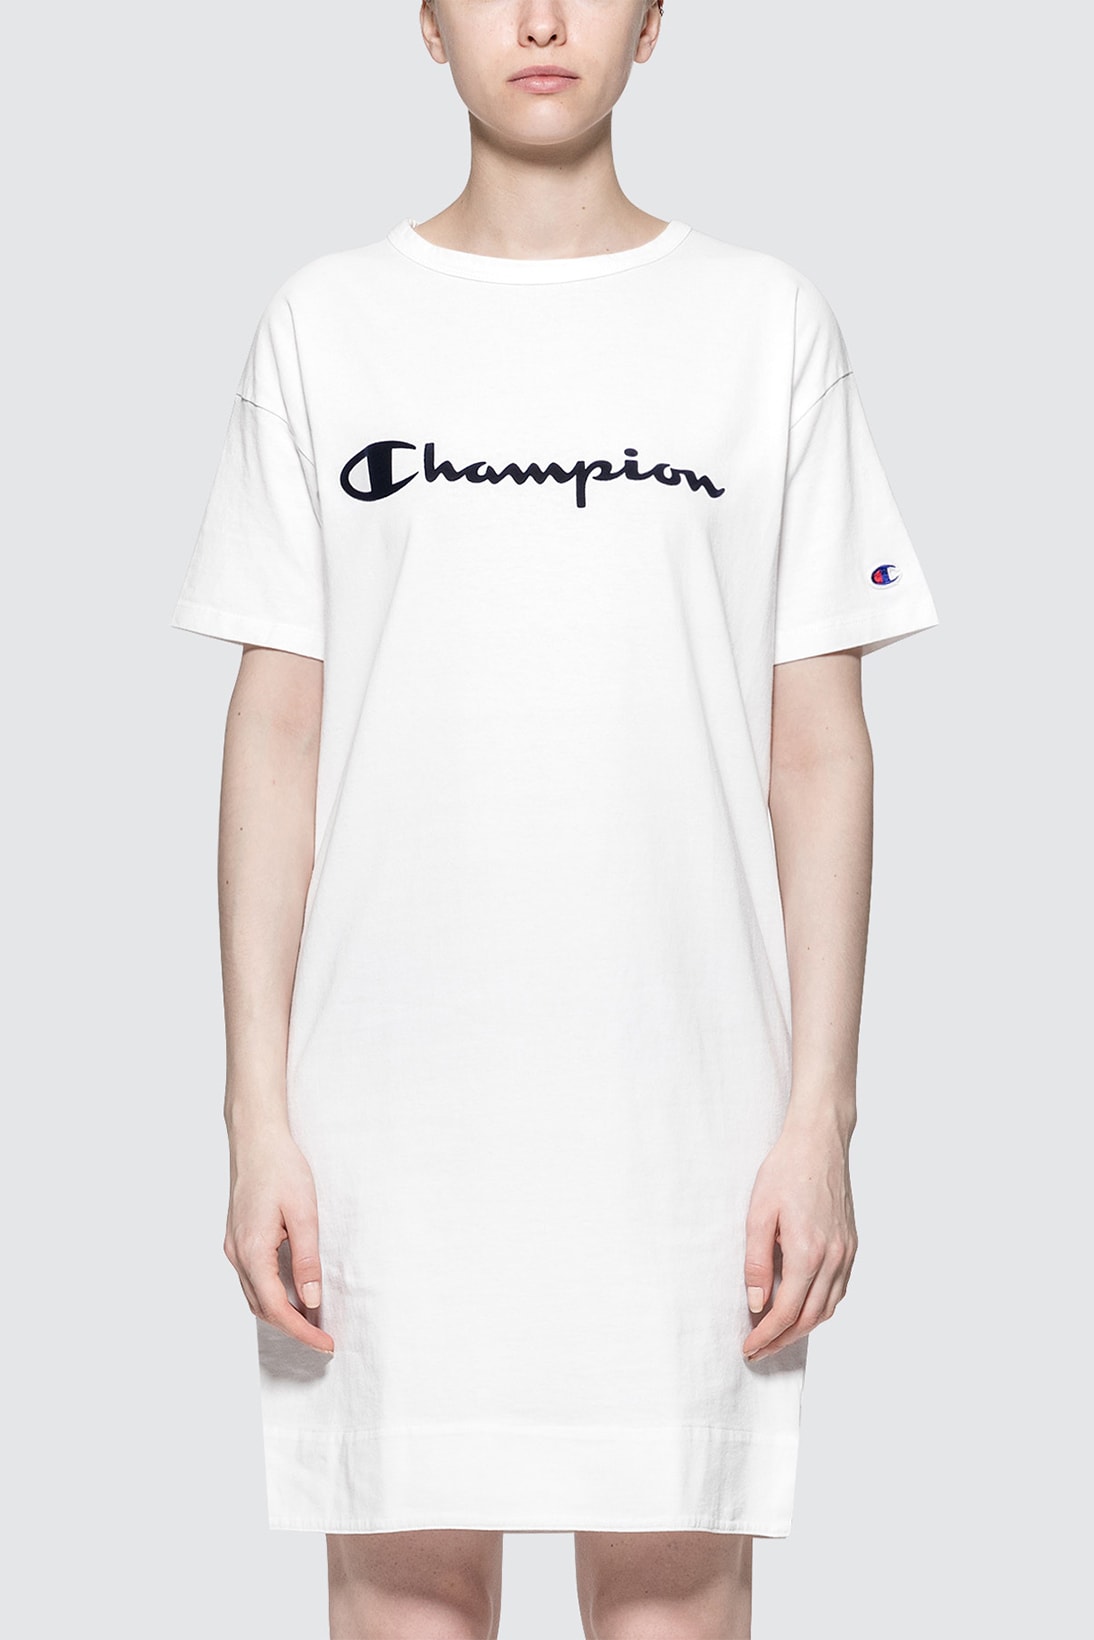 to Buy a Champion Japan Logo T-Shirt | Hypebae